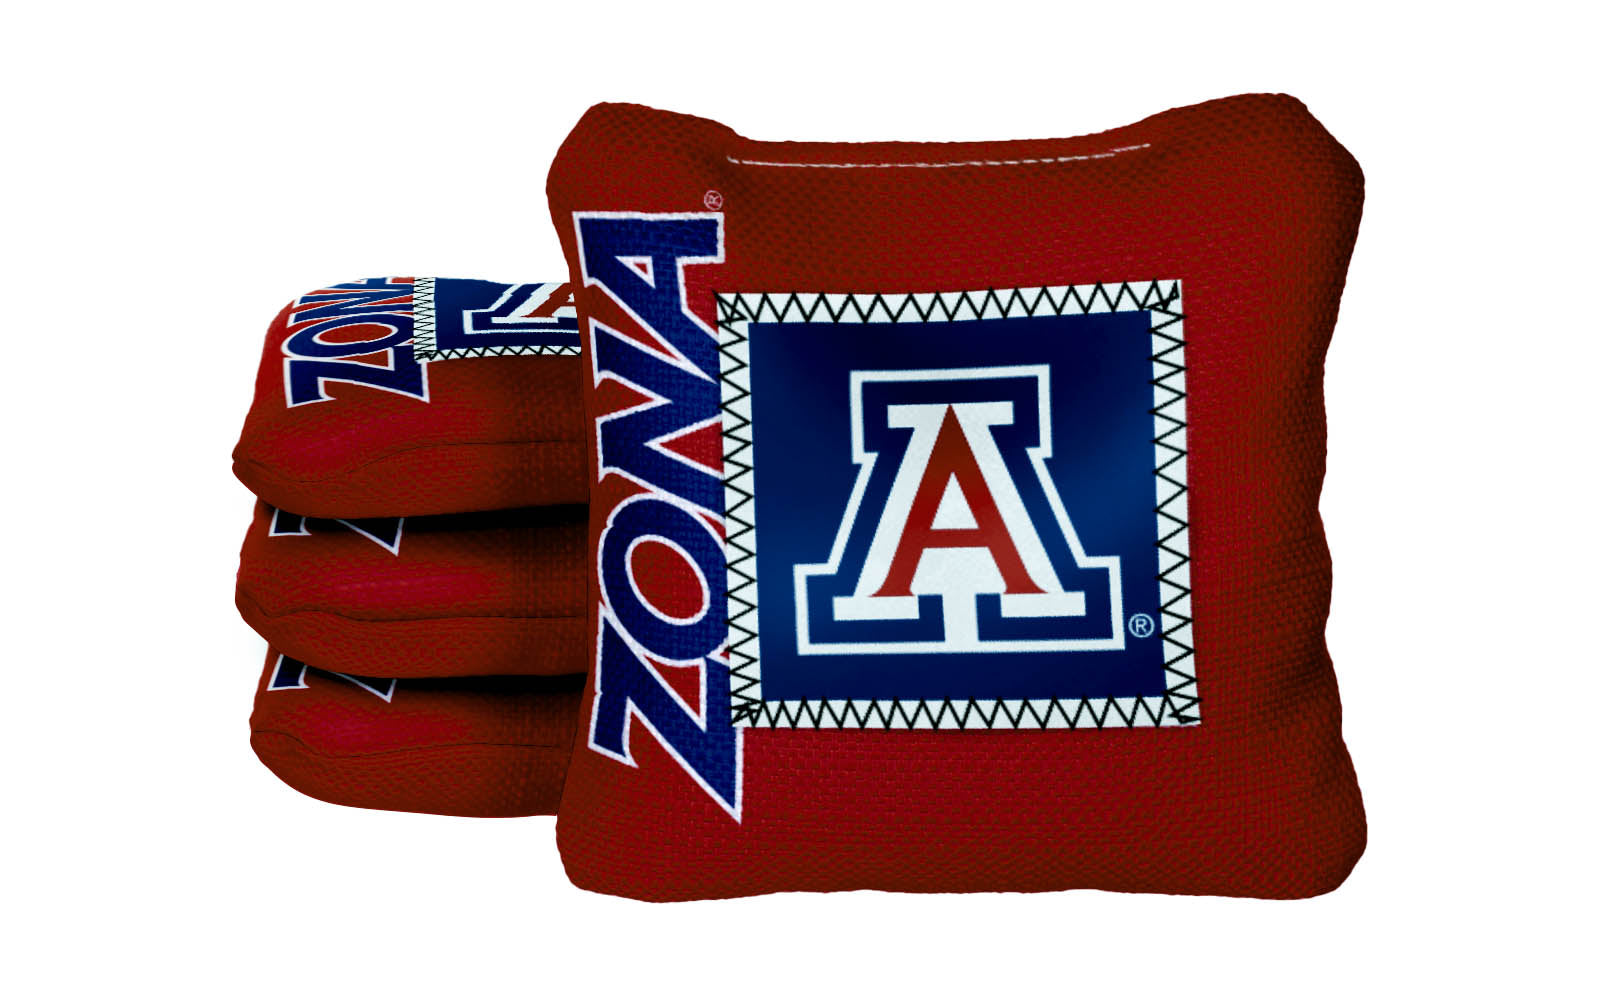 Officially Licensed Collegiate Cornhole Bags - AllCornhole Game Changers - Set of 4 - University of Arizona